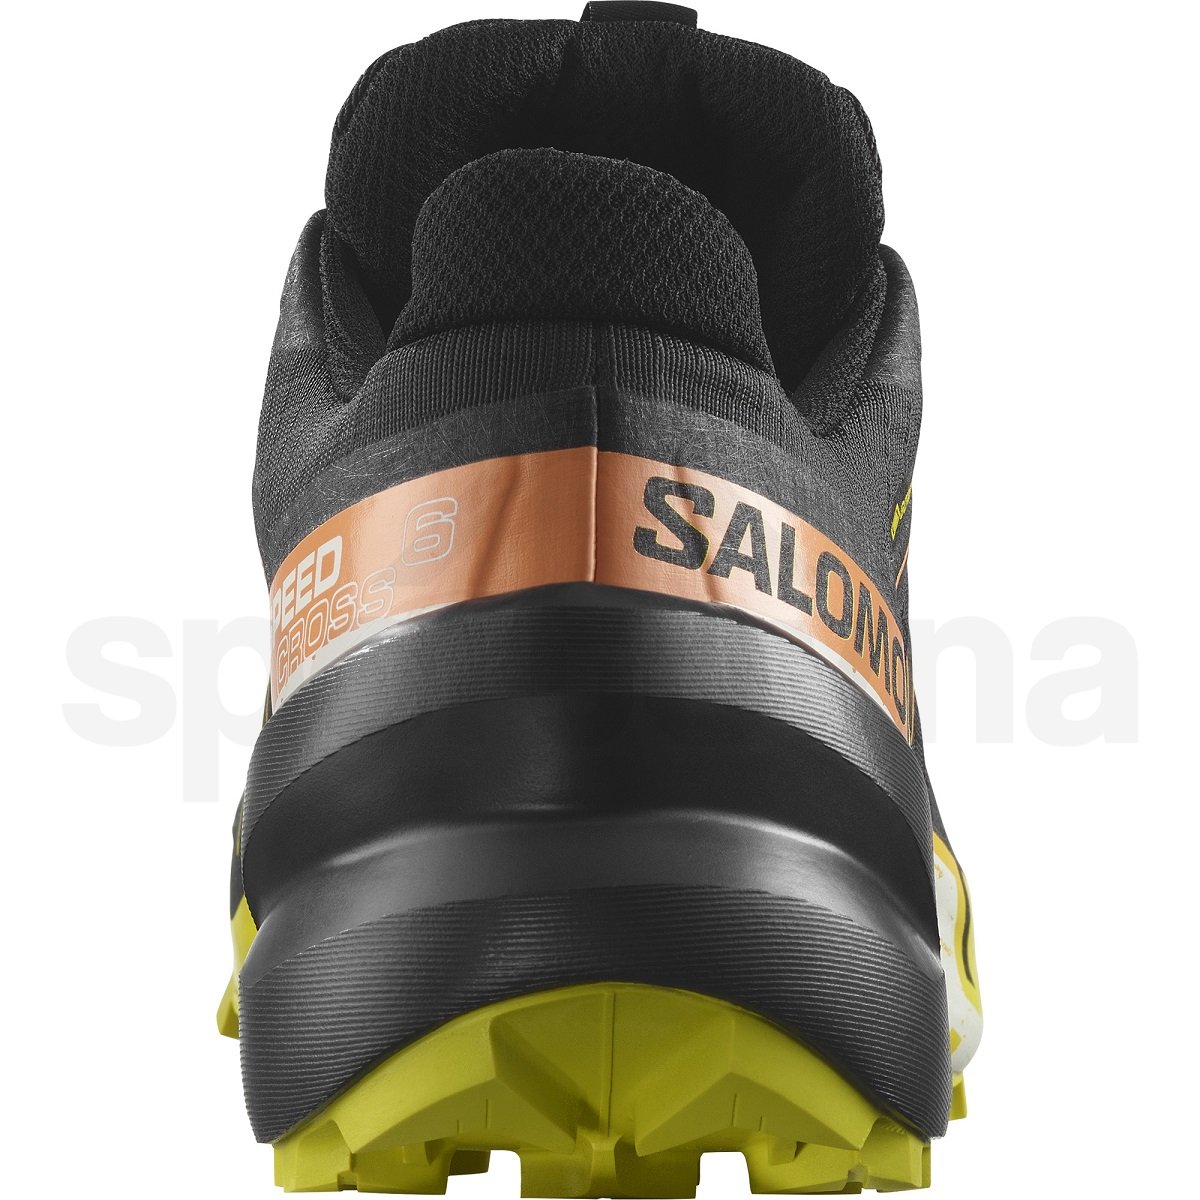 Obuv Salomon Speedcross 6 GTX M - černá/žlutá